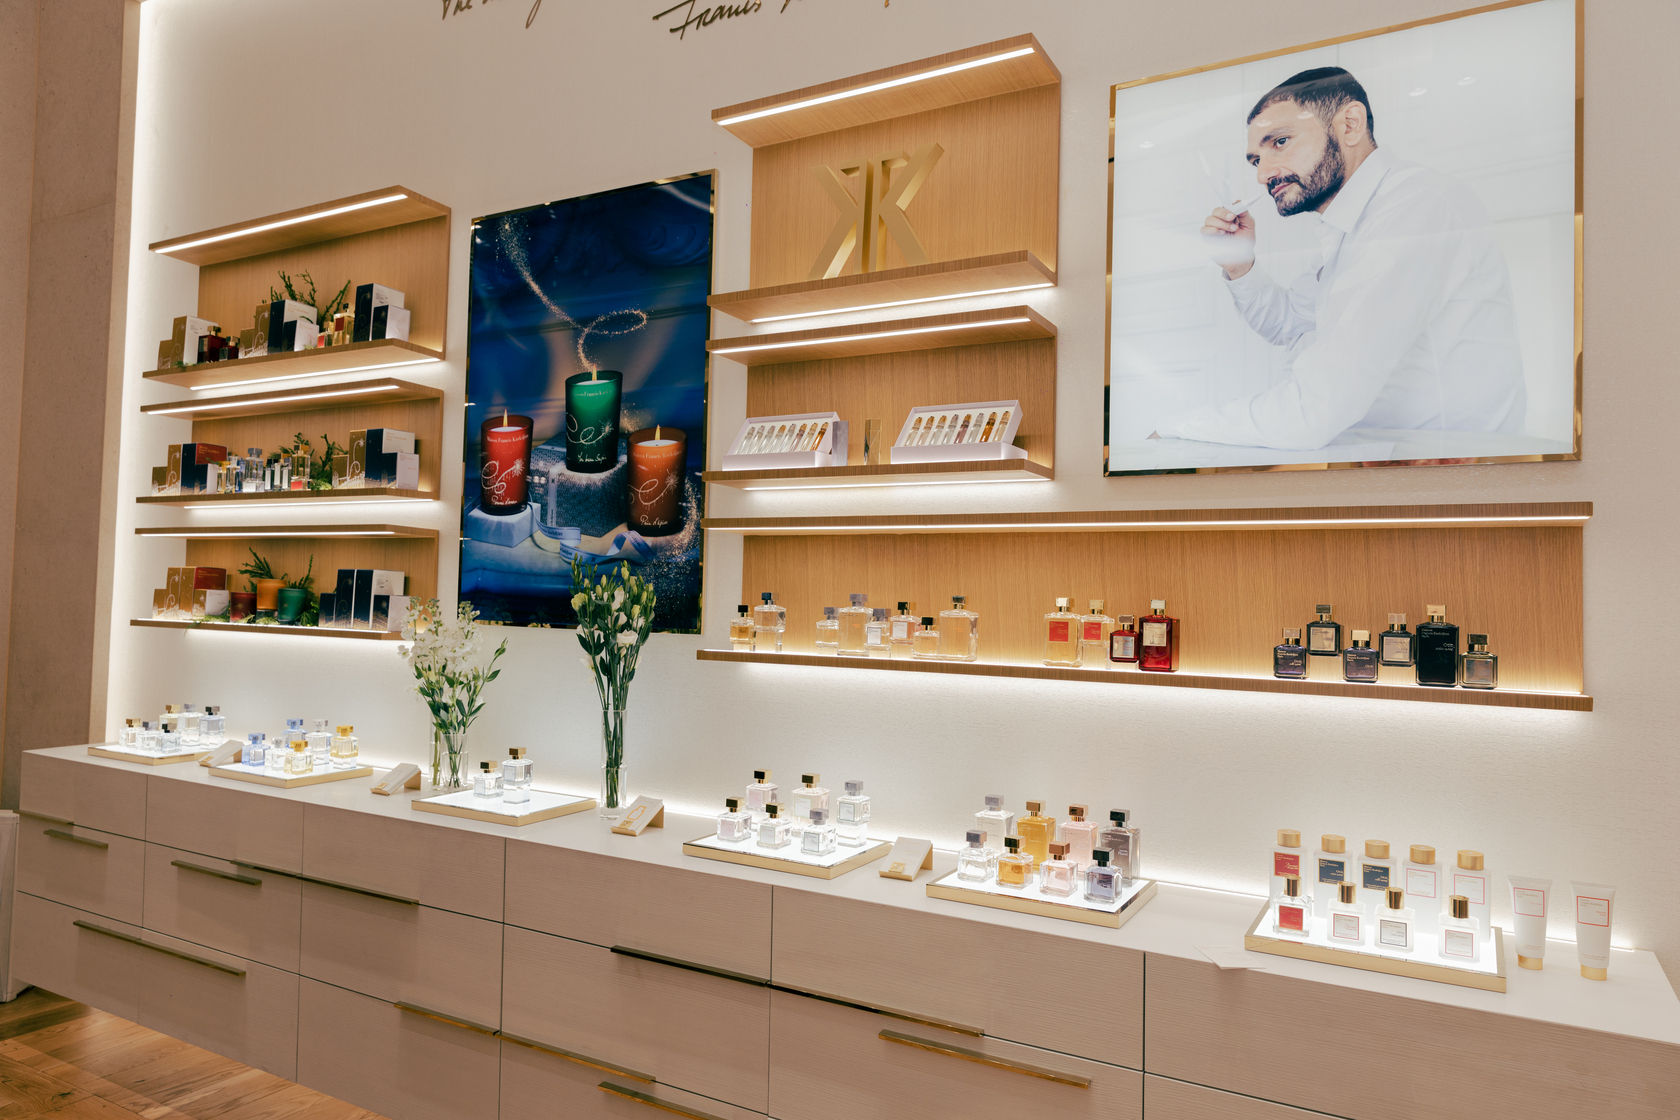 Dior unveils highly anticipated fragrance by perfumer Francis Kurkdjian